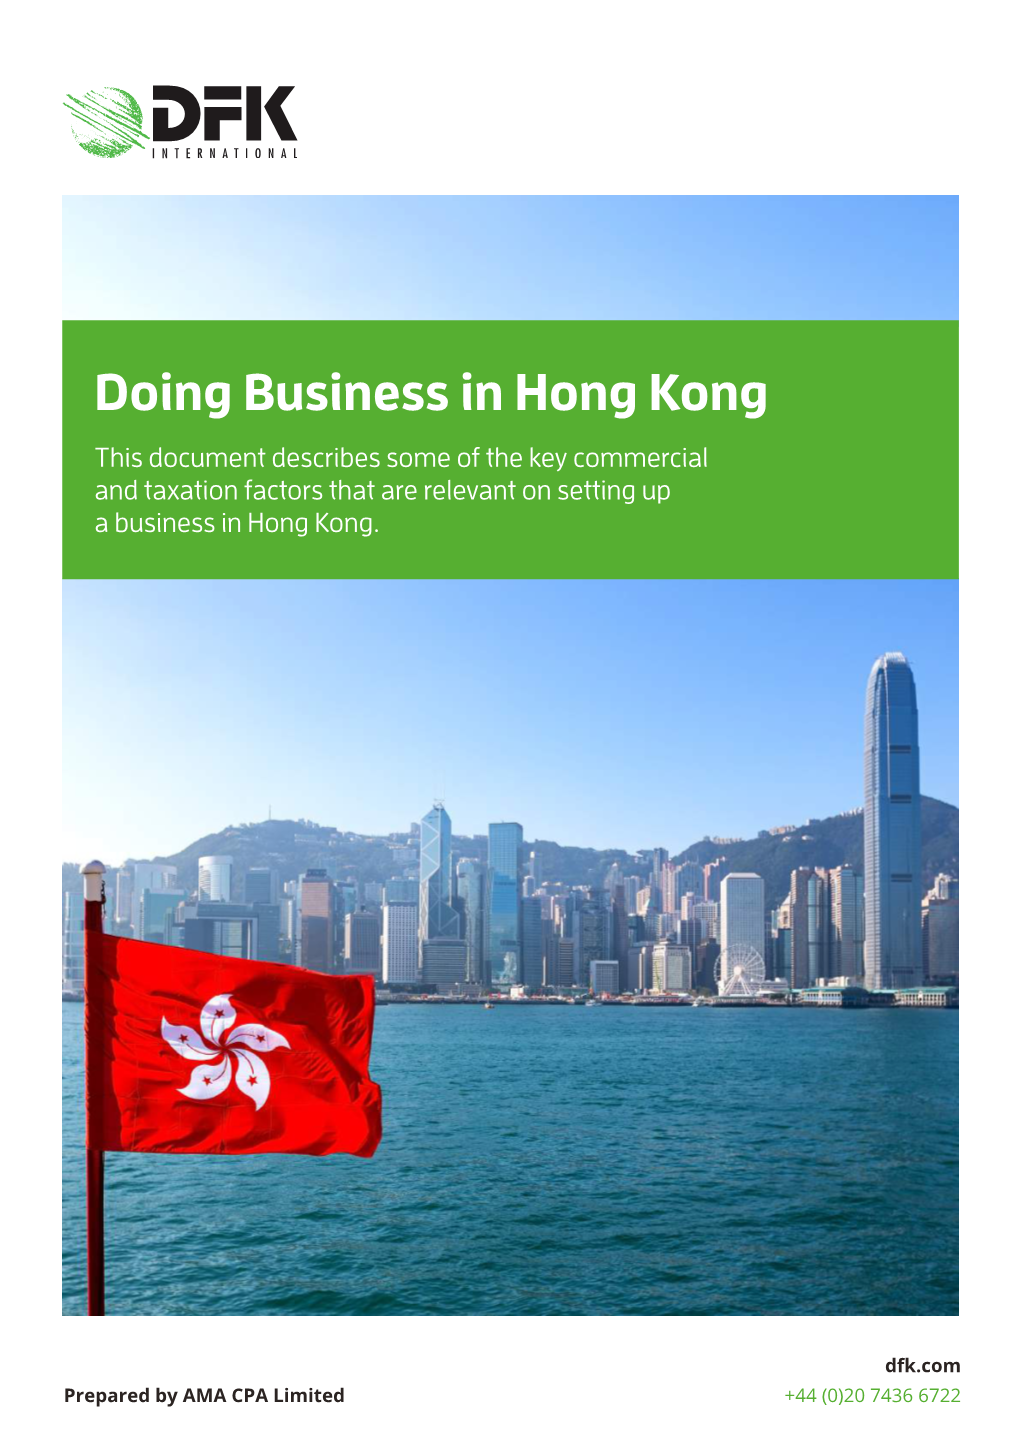 DFK Doing Business in Hong Kong